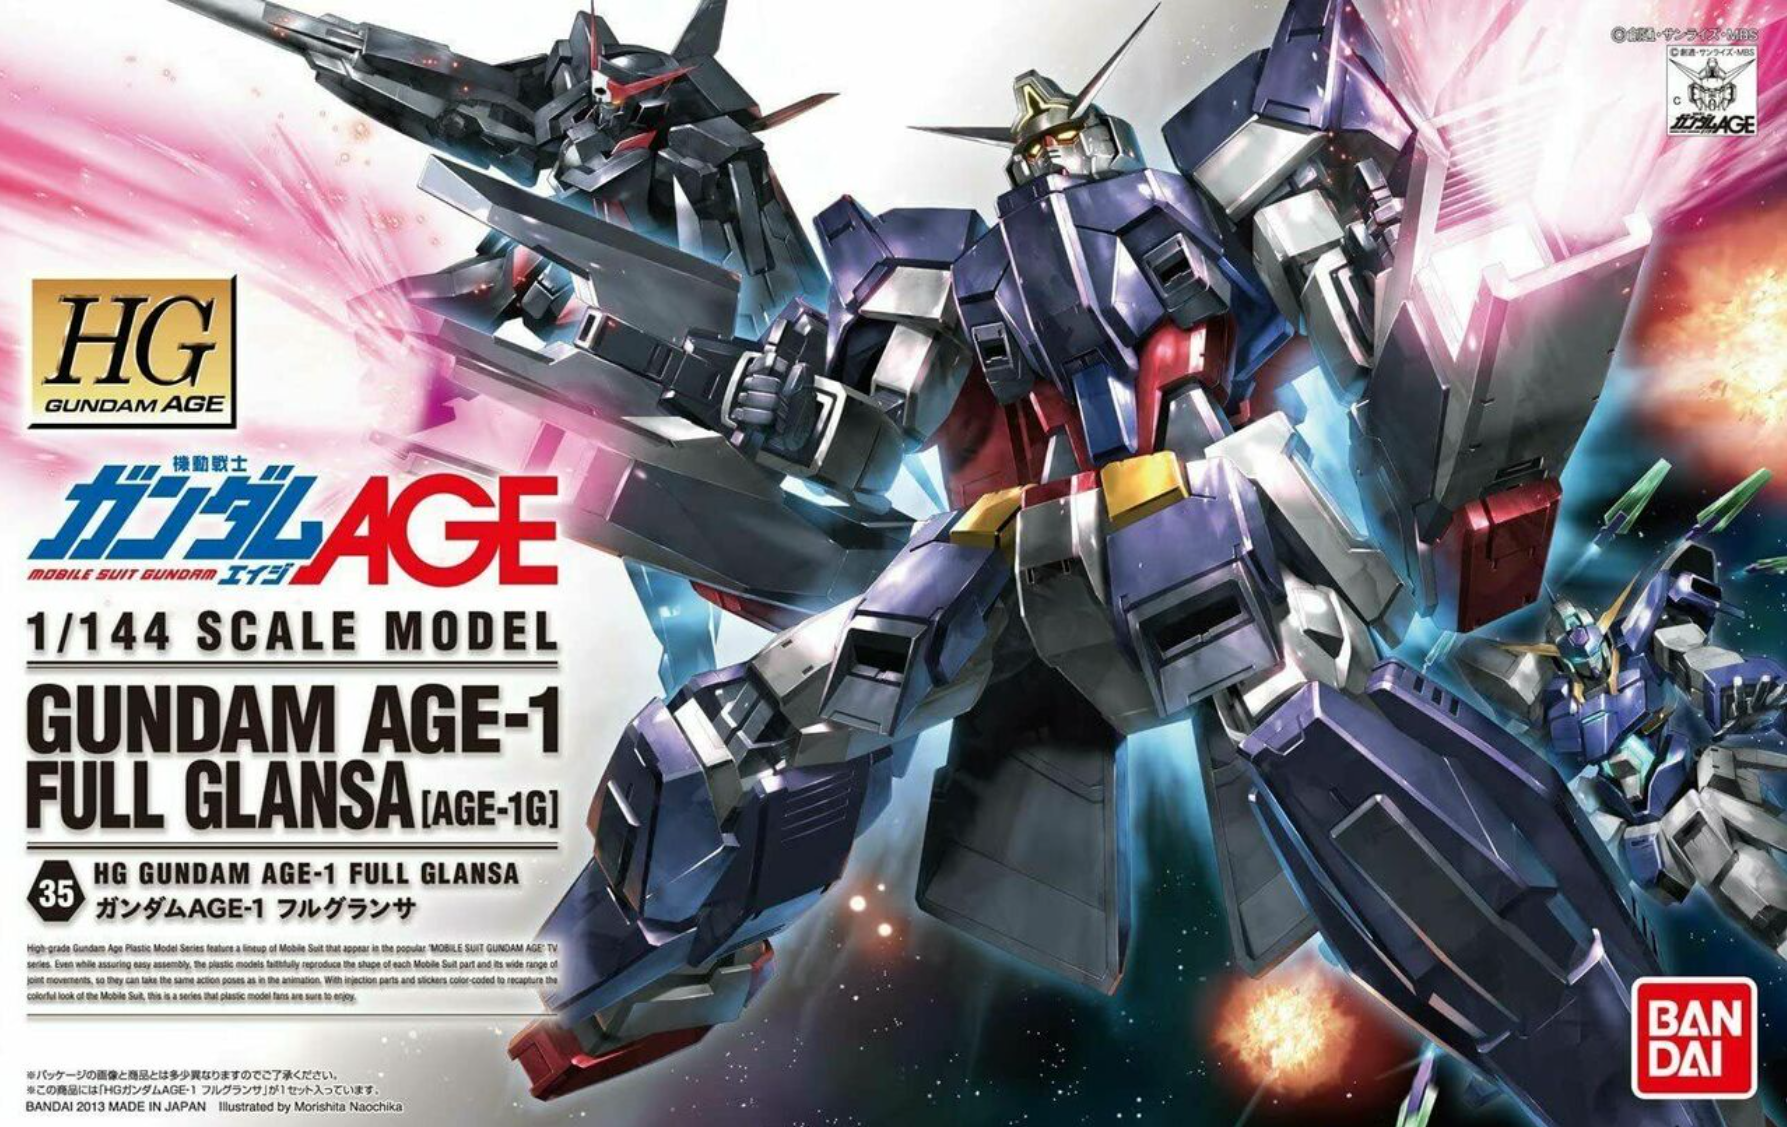 HG Gundam Age-1 Full Glansa